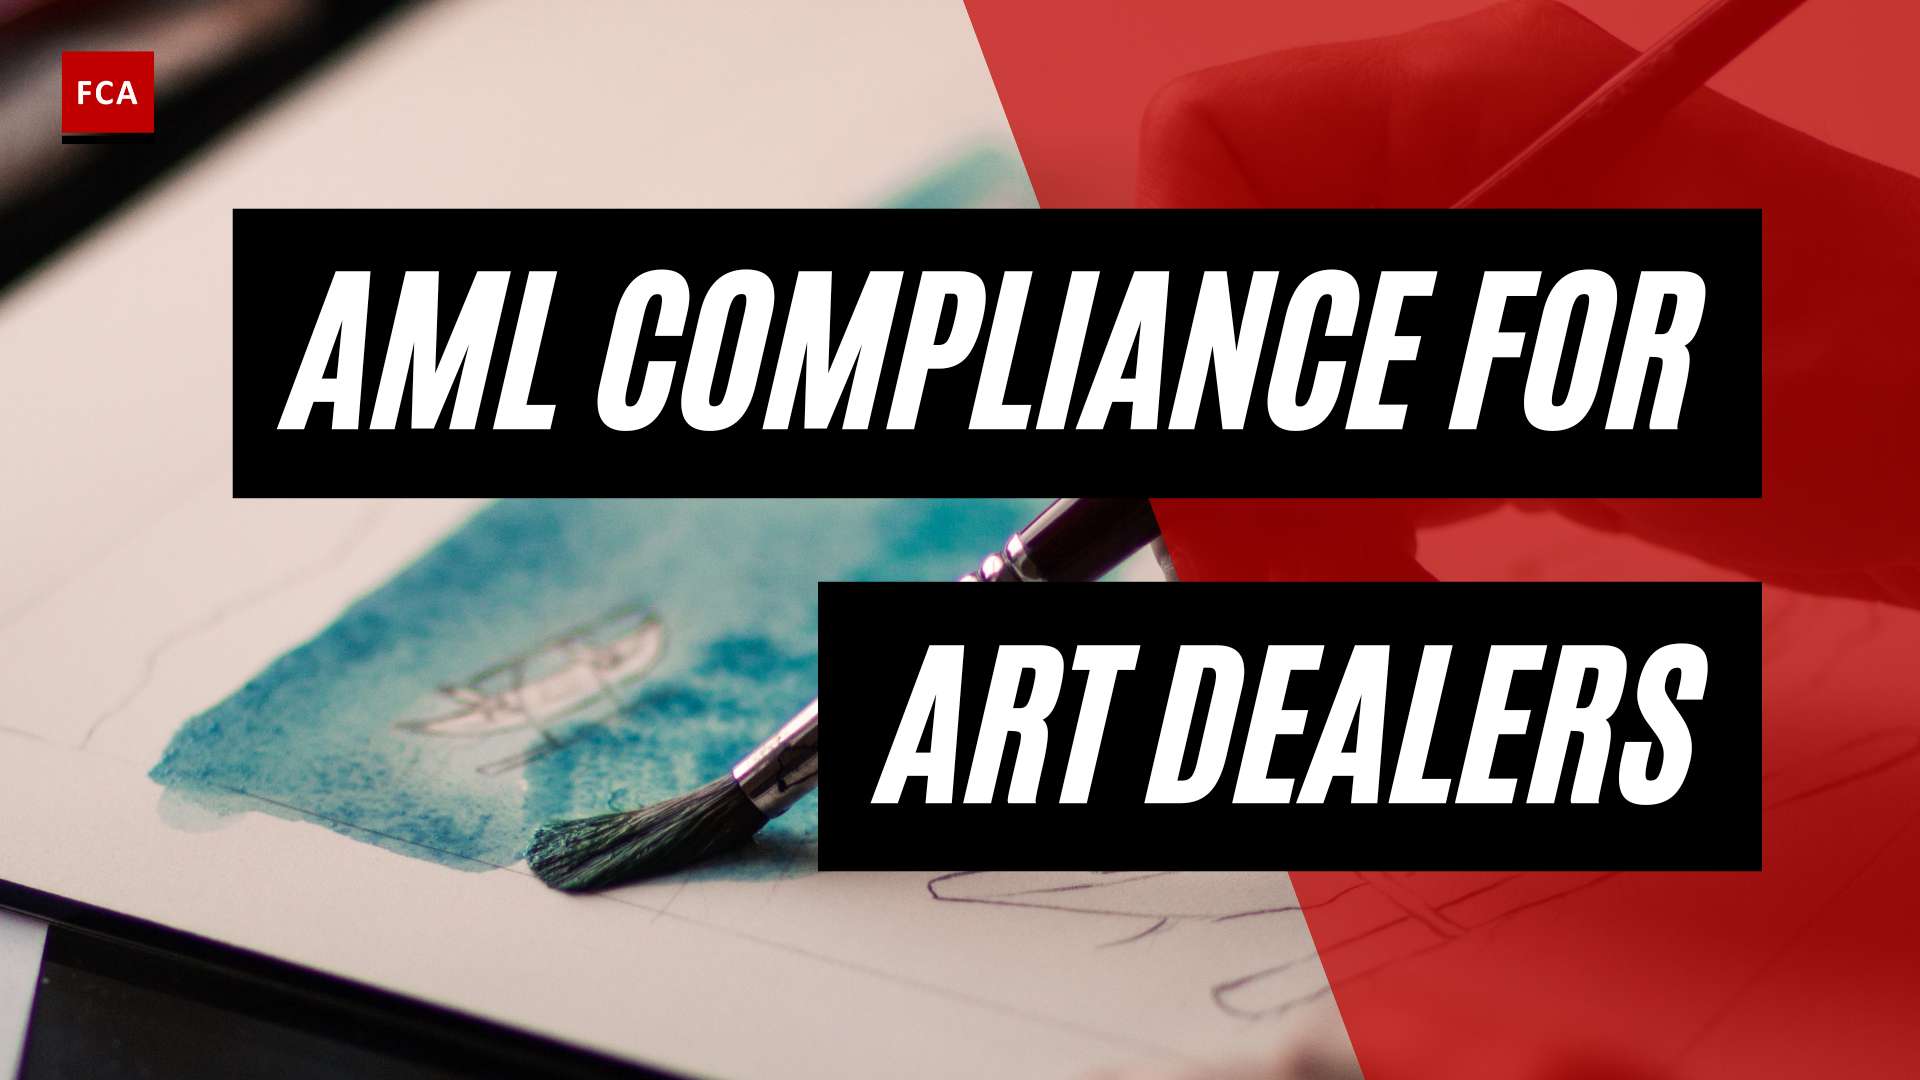 Unmasking The Risks: Aml Compliance Essentials For Art Dealers